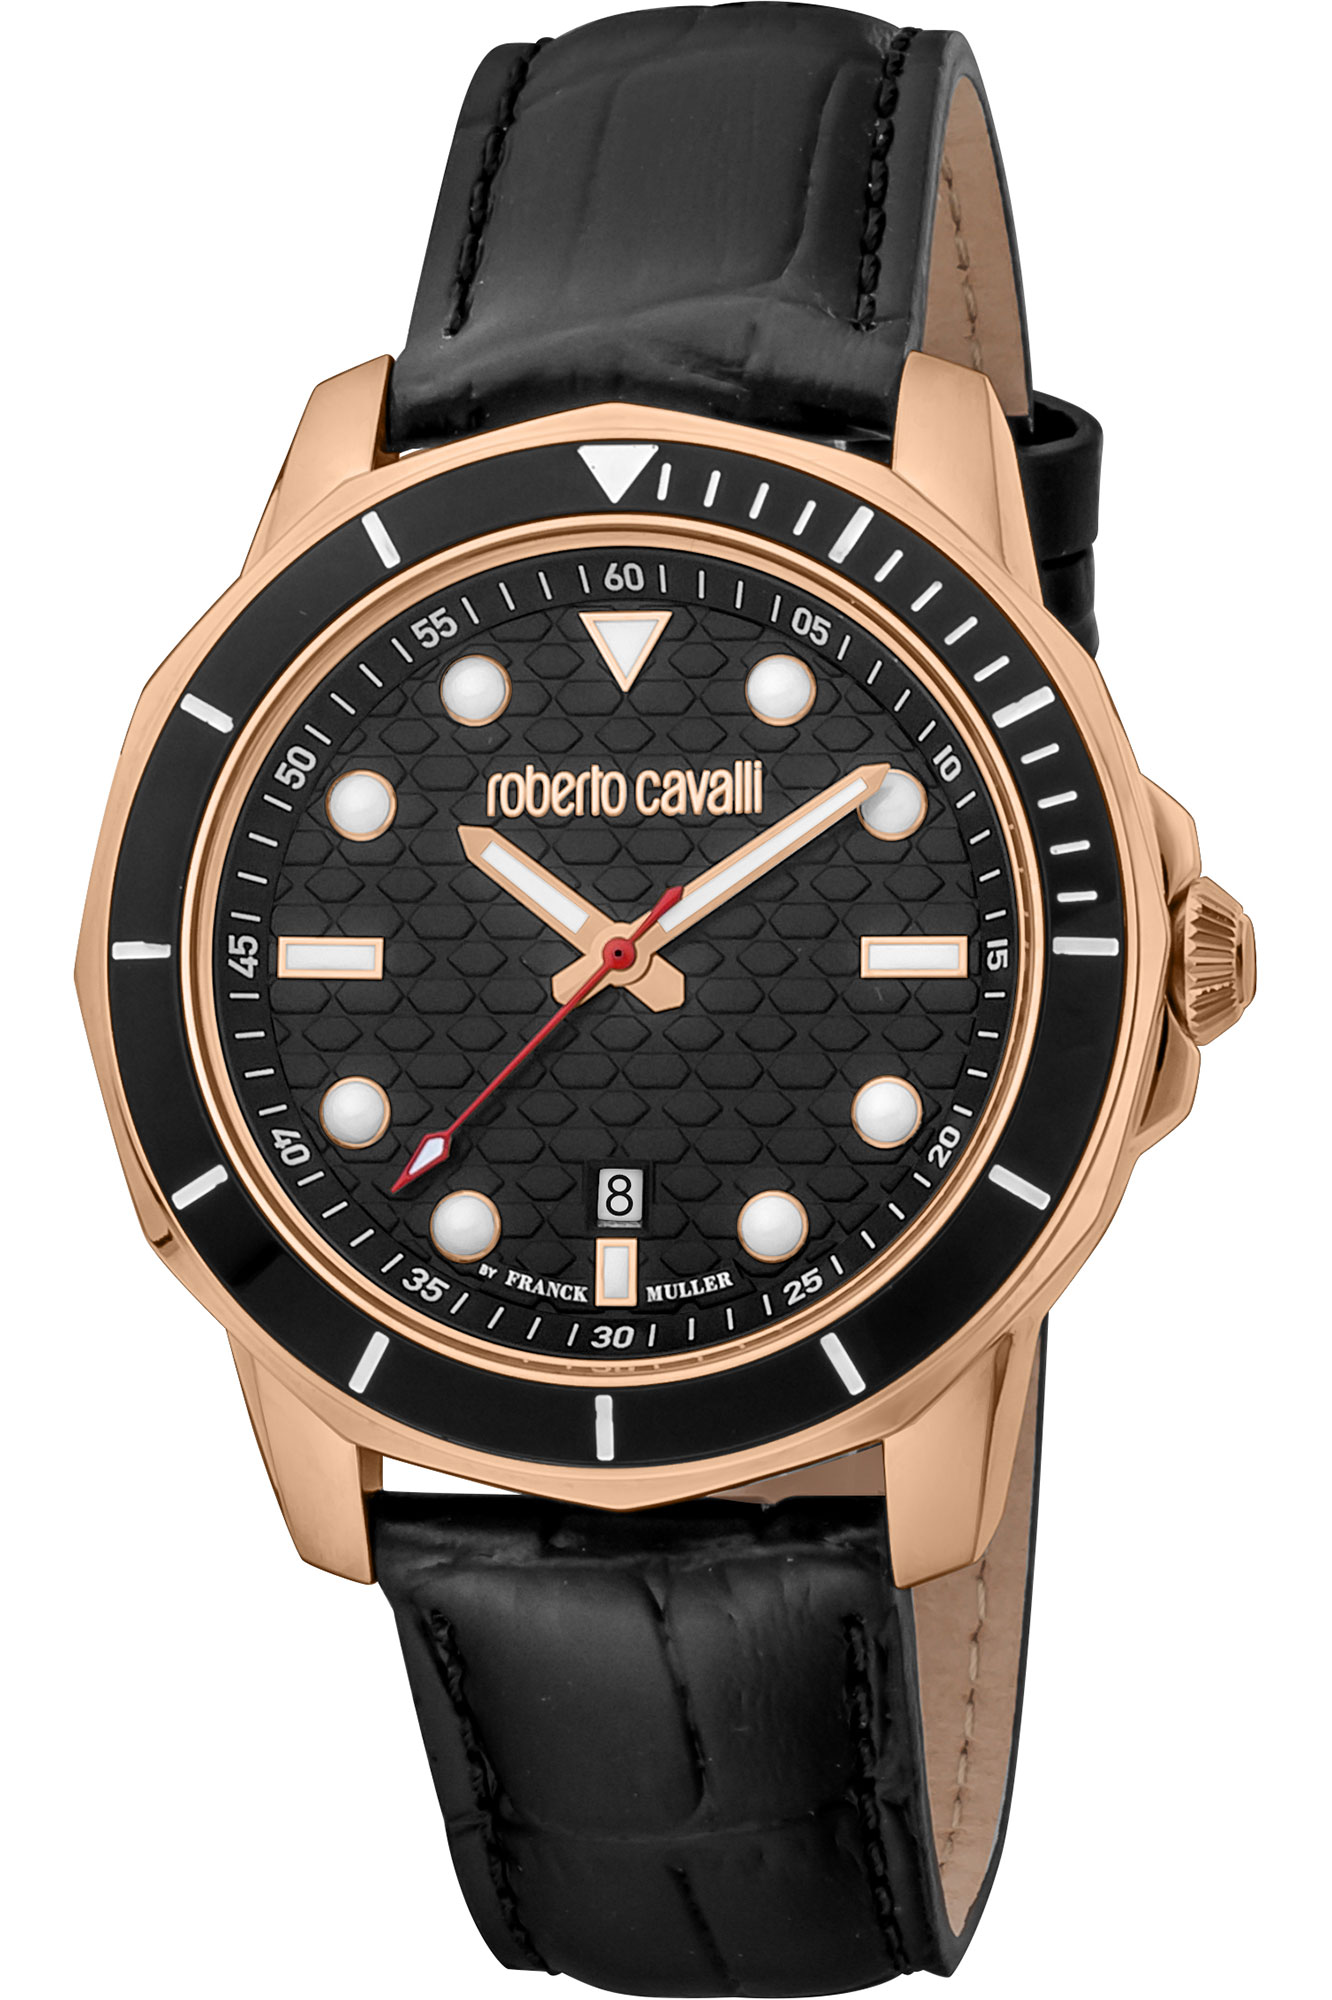 Watch Roberto Cavalli by Franck Muller rv1g159l0041